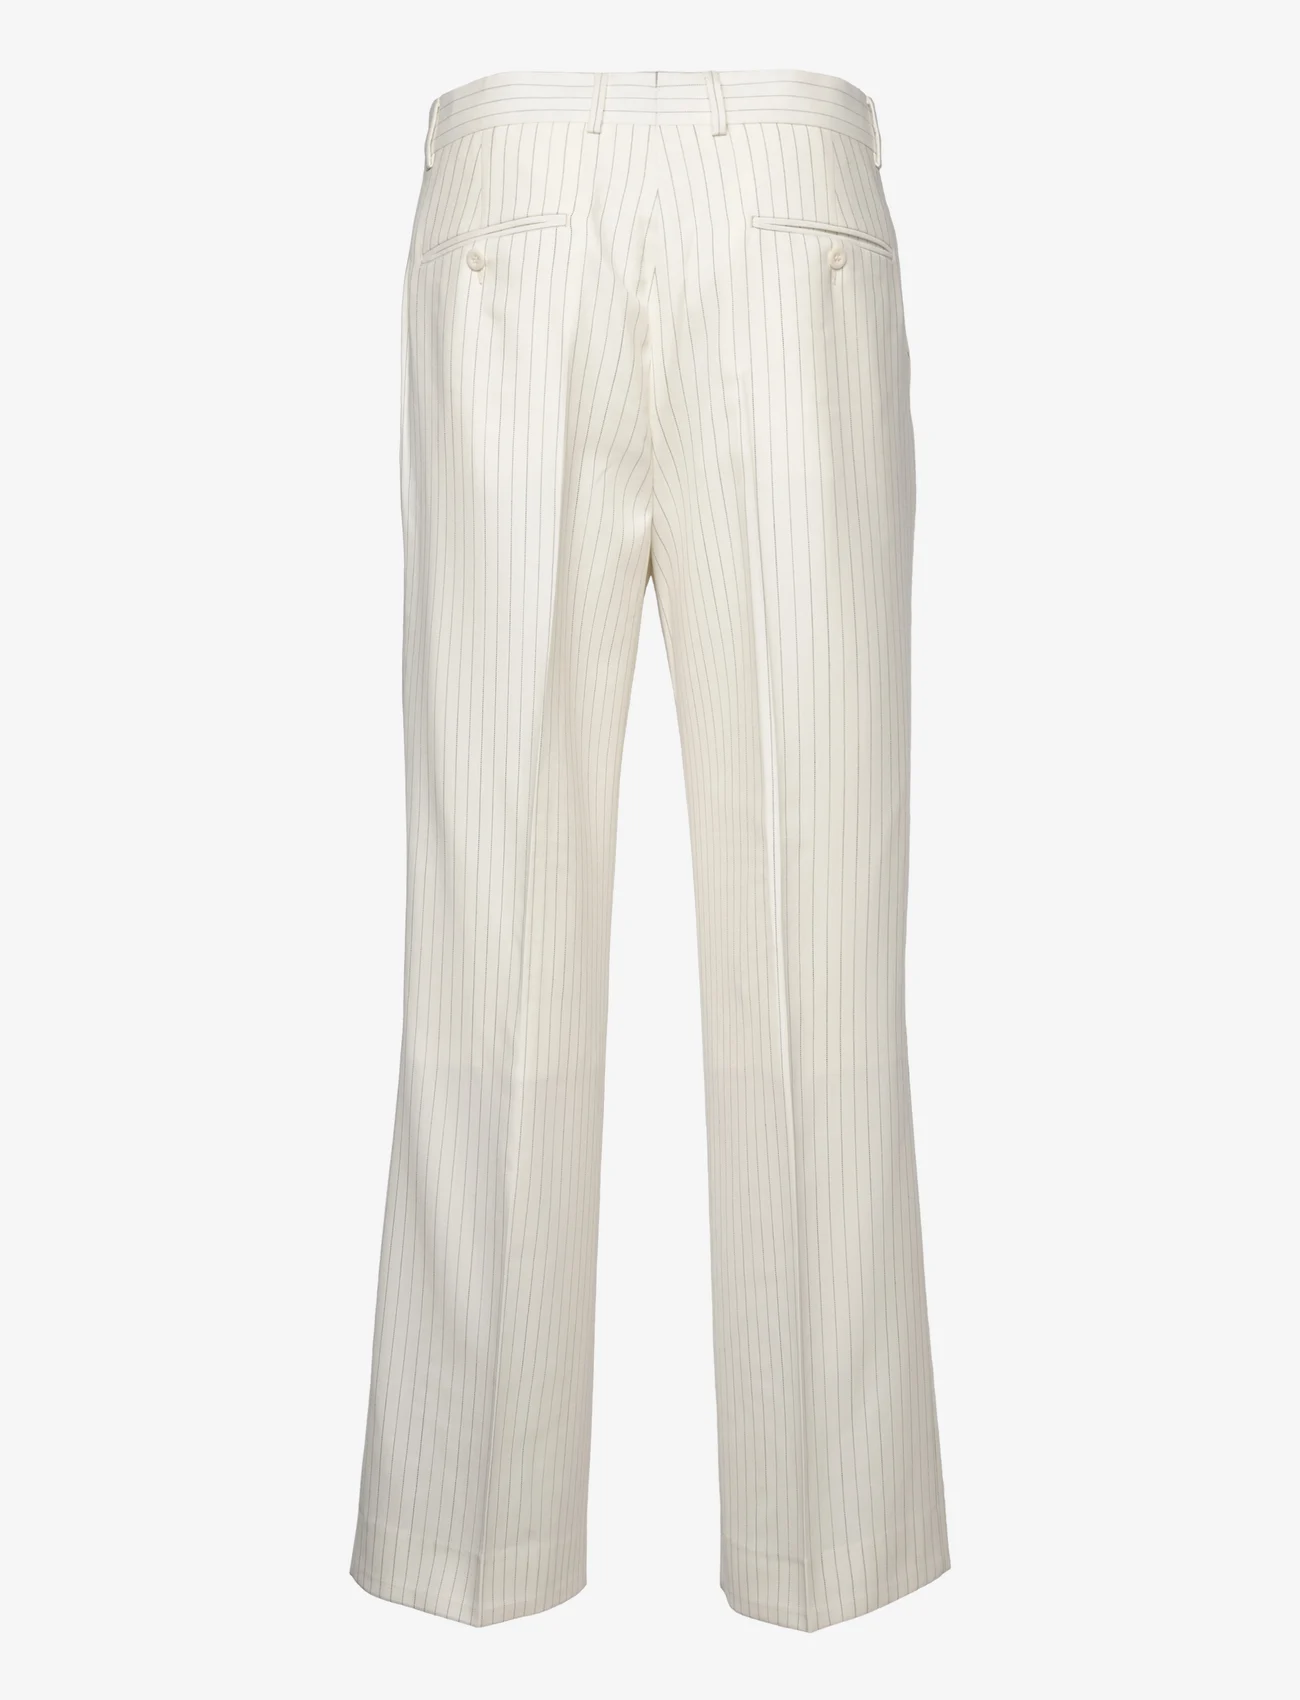 GANT - D1. PINSTRIPE PANTS - casual trousers - caulk white - 1